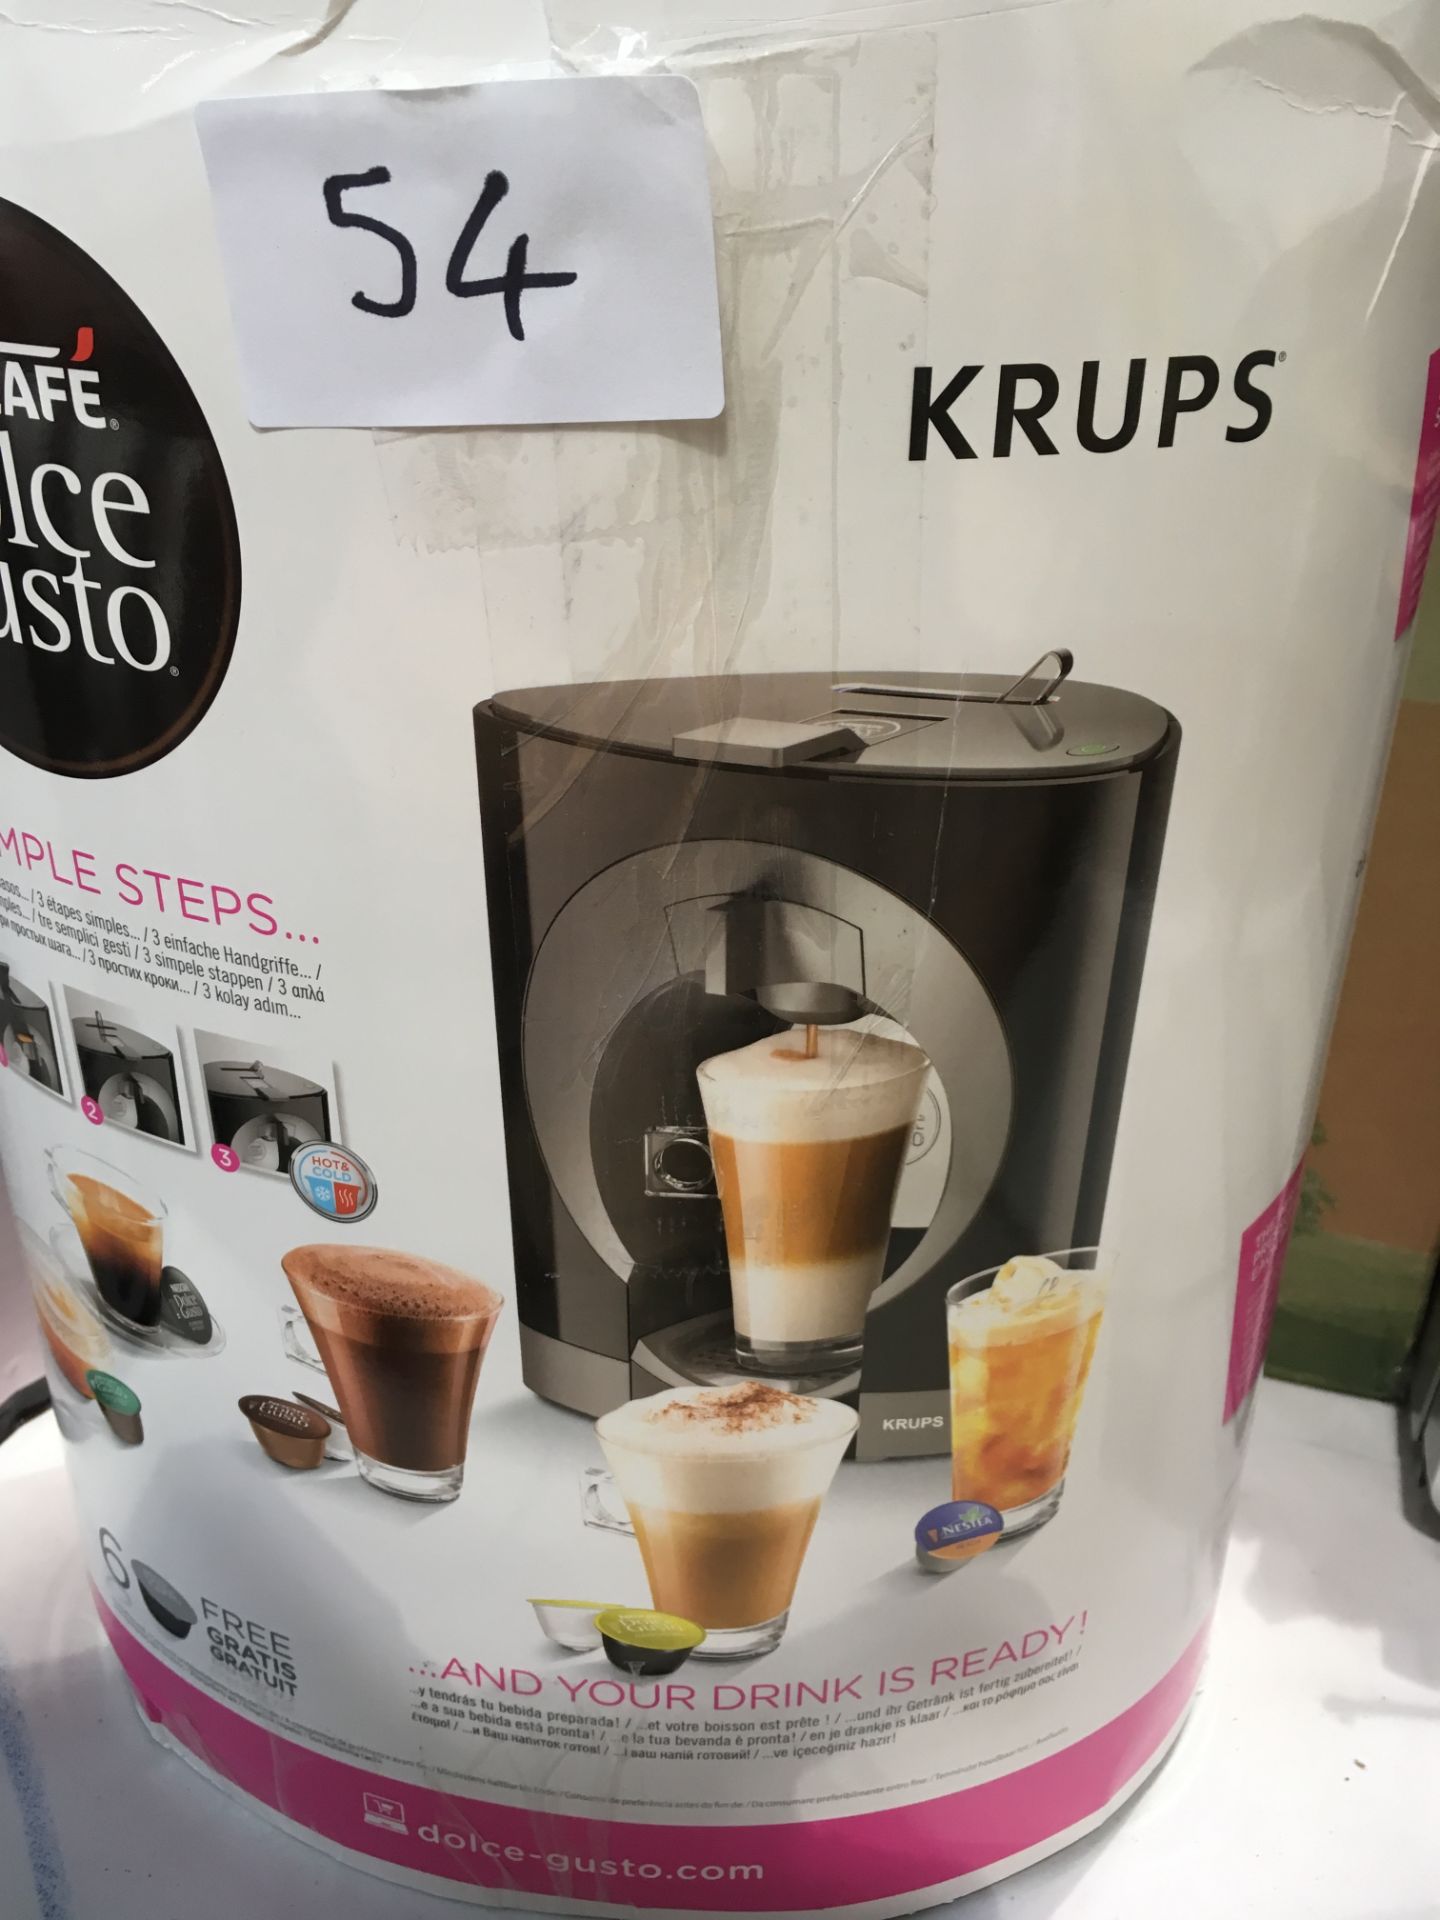 Krups Nescafe Dolce Gusto . Working customer return.